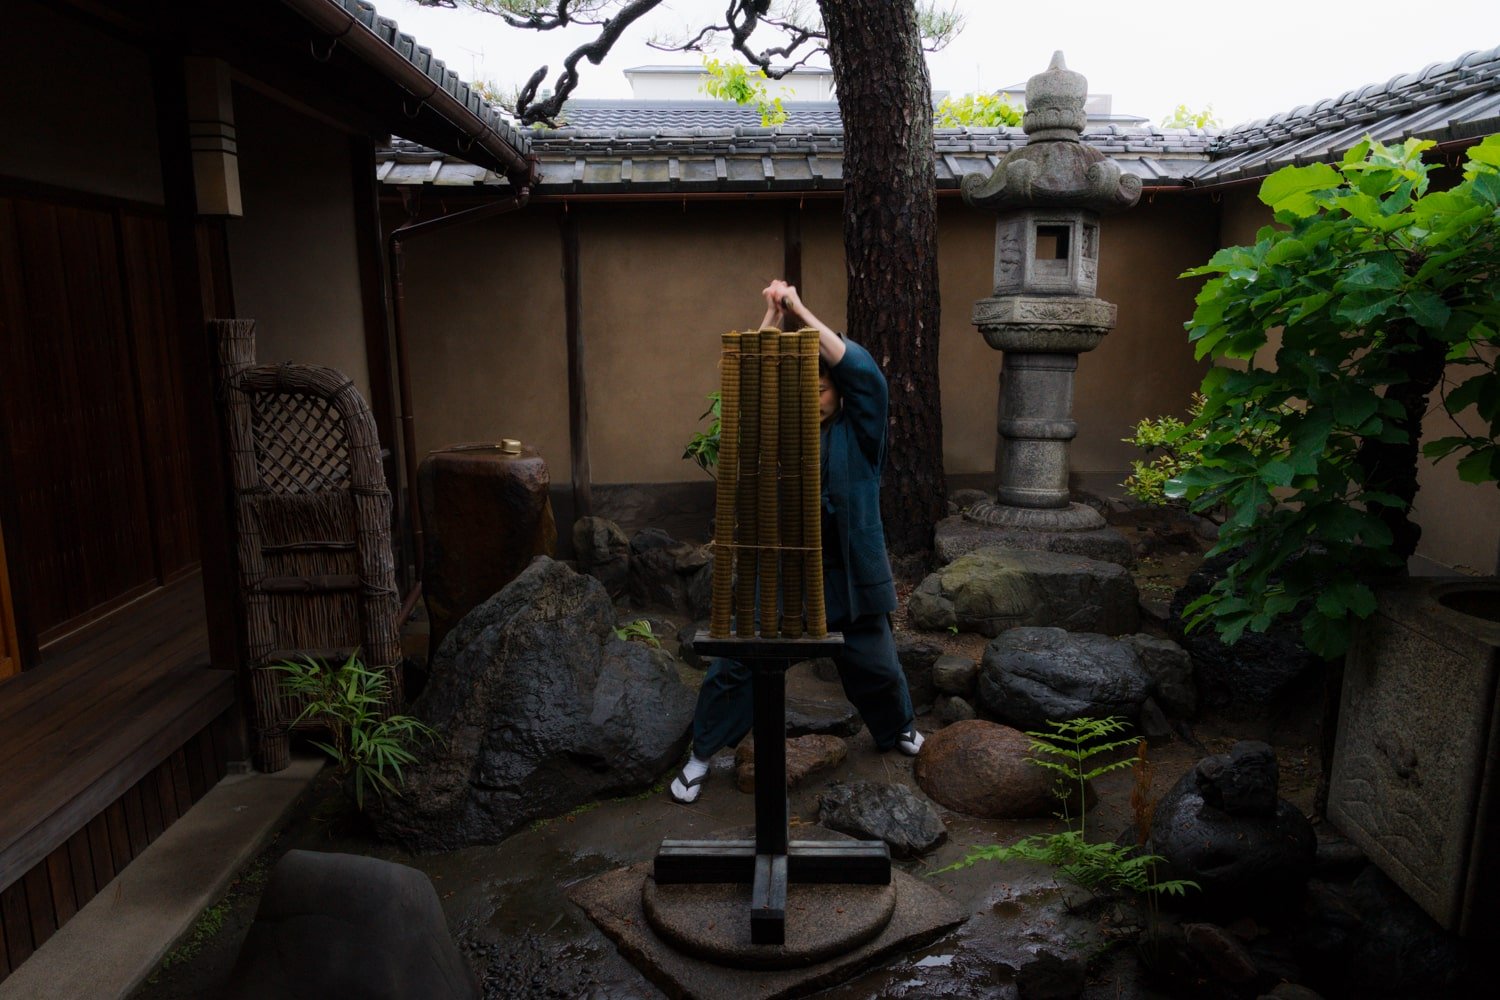 A katana sword master prepares to slice through 5 rolled tatami mats in a Japanese garden.